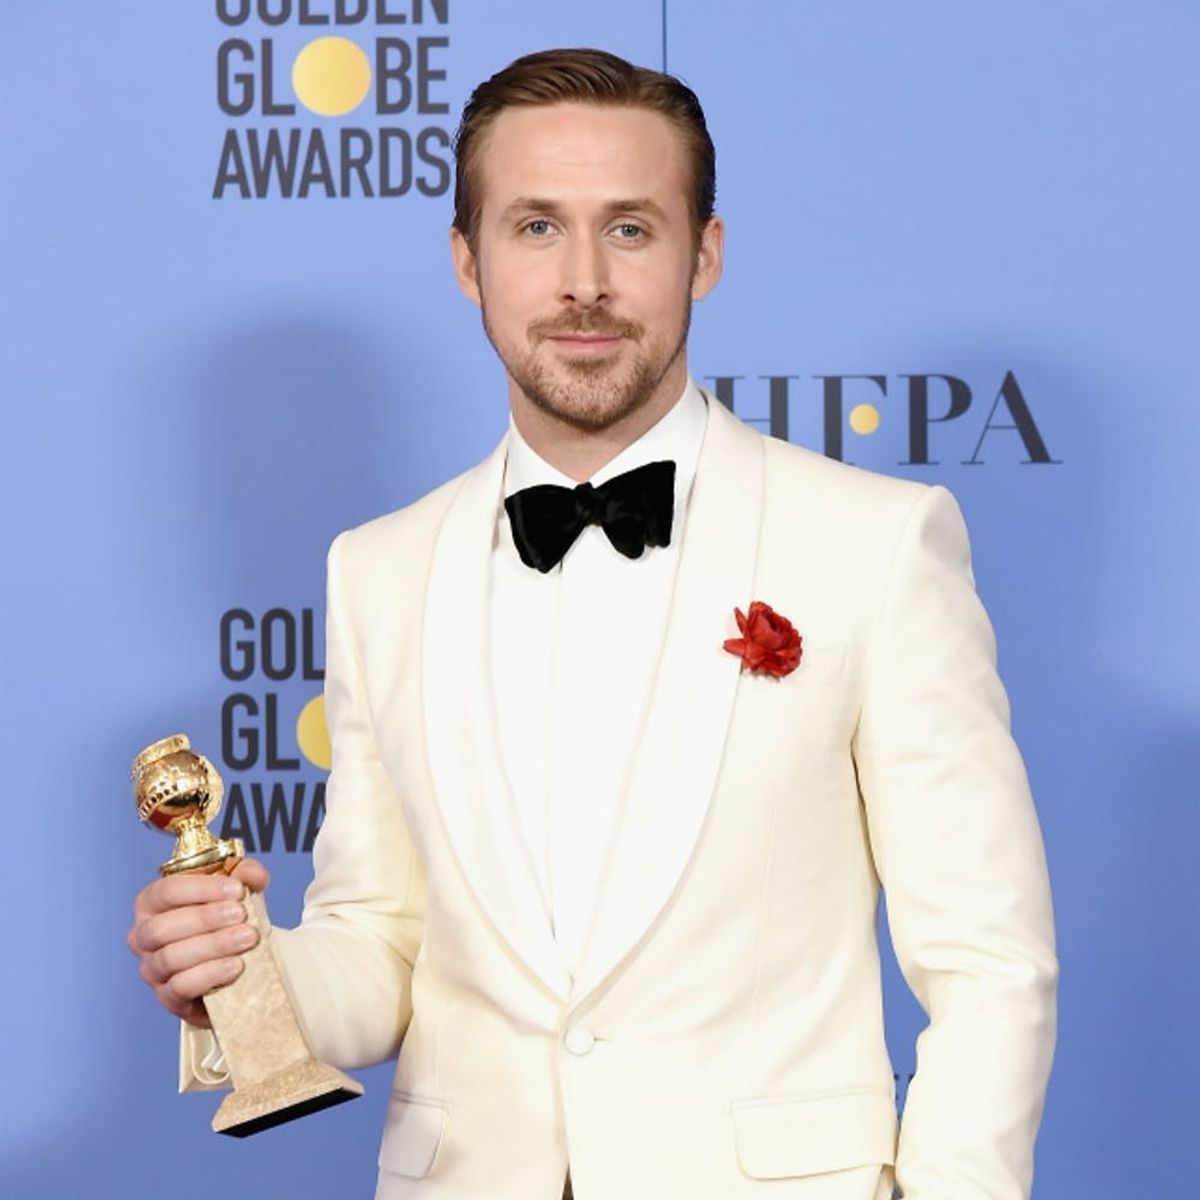 Ryan Gosling’s Golden Globes Acceptance Speech Will Make Your Heart Sing